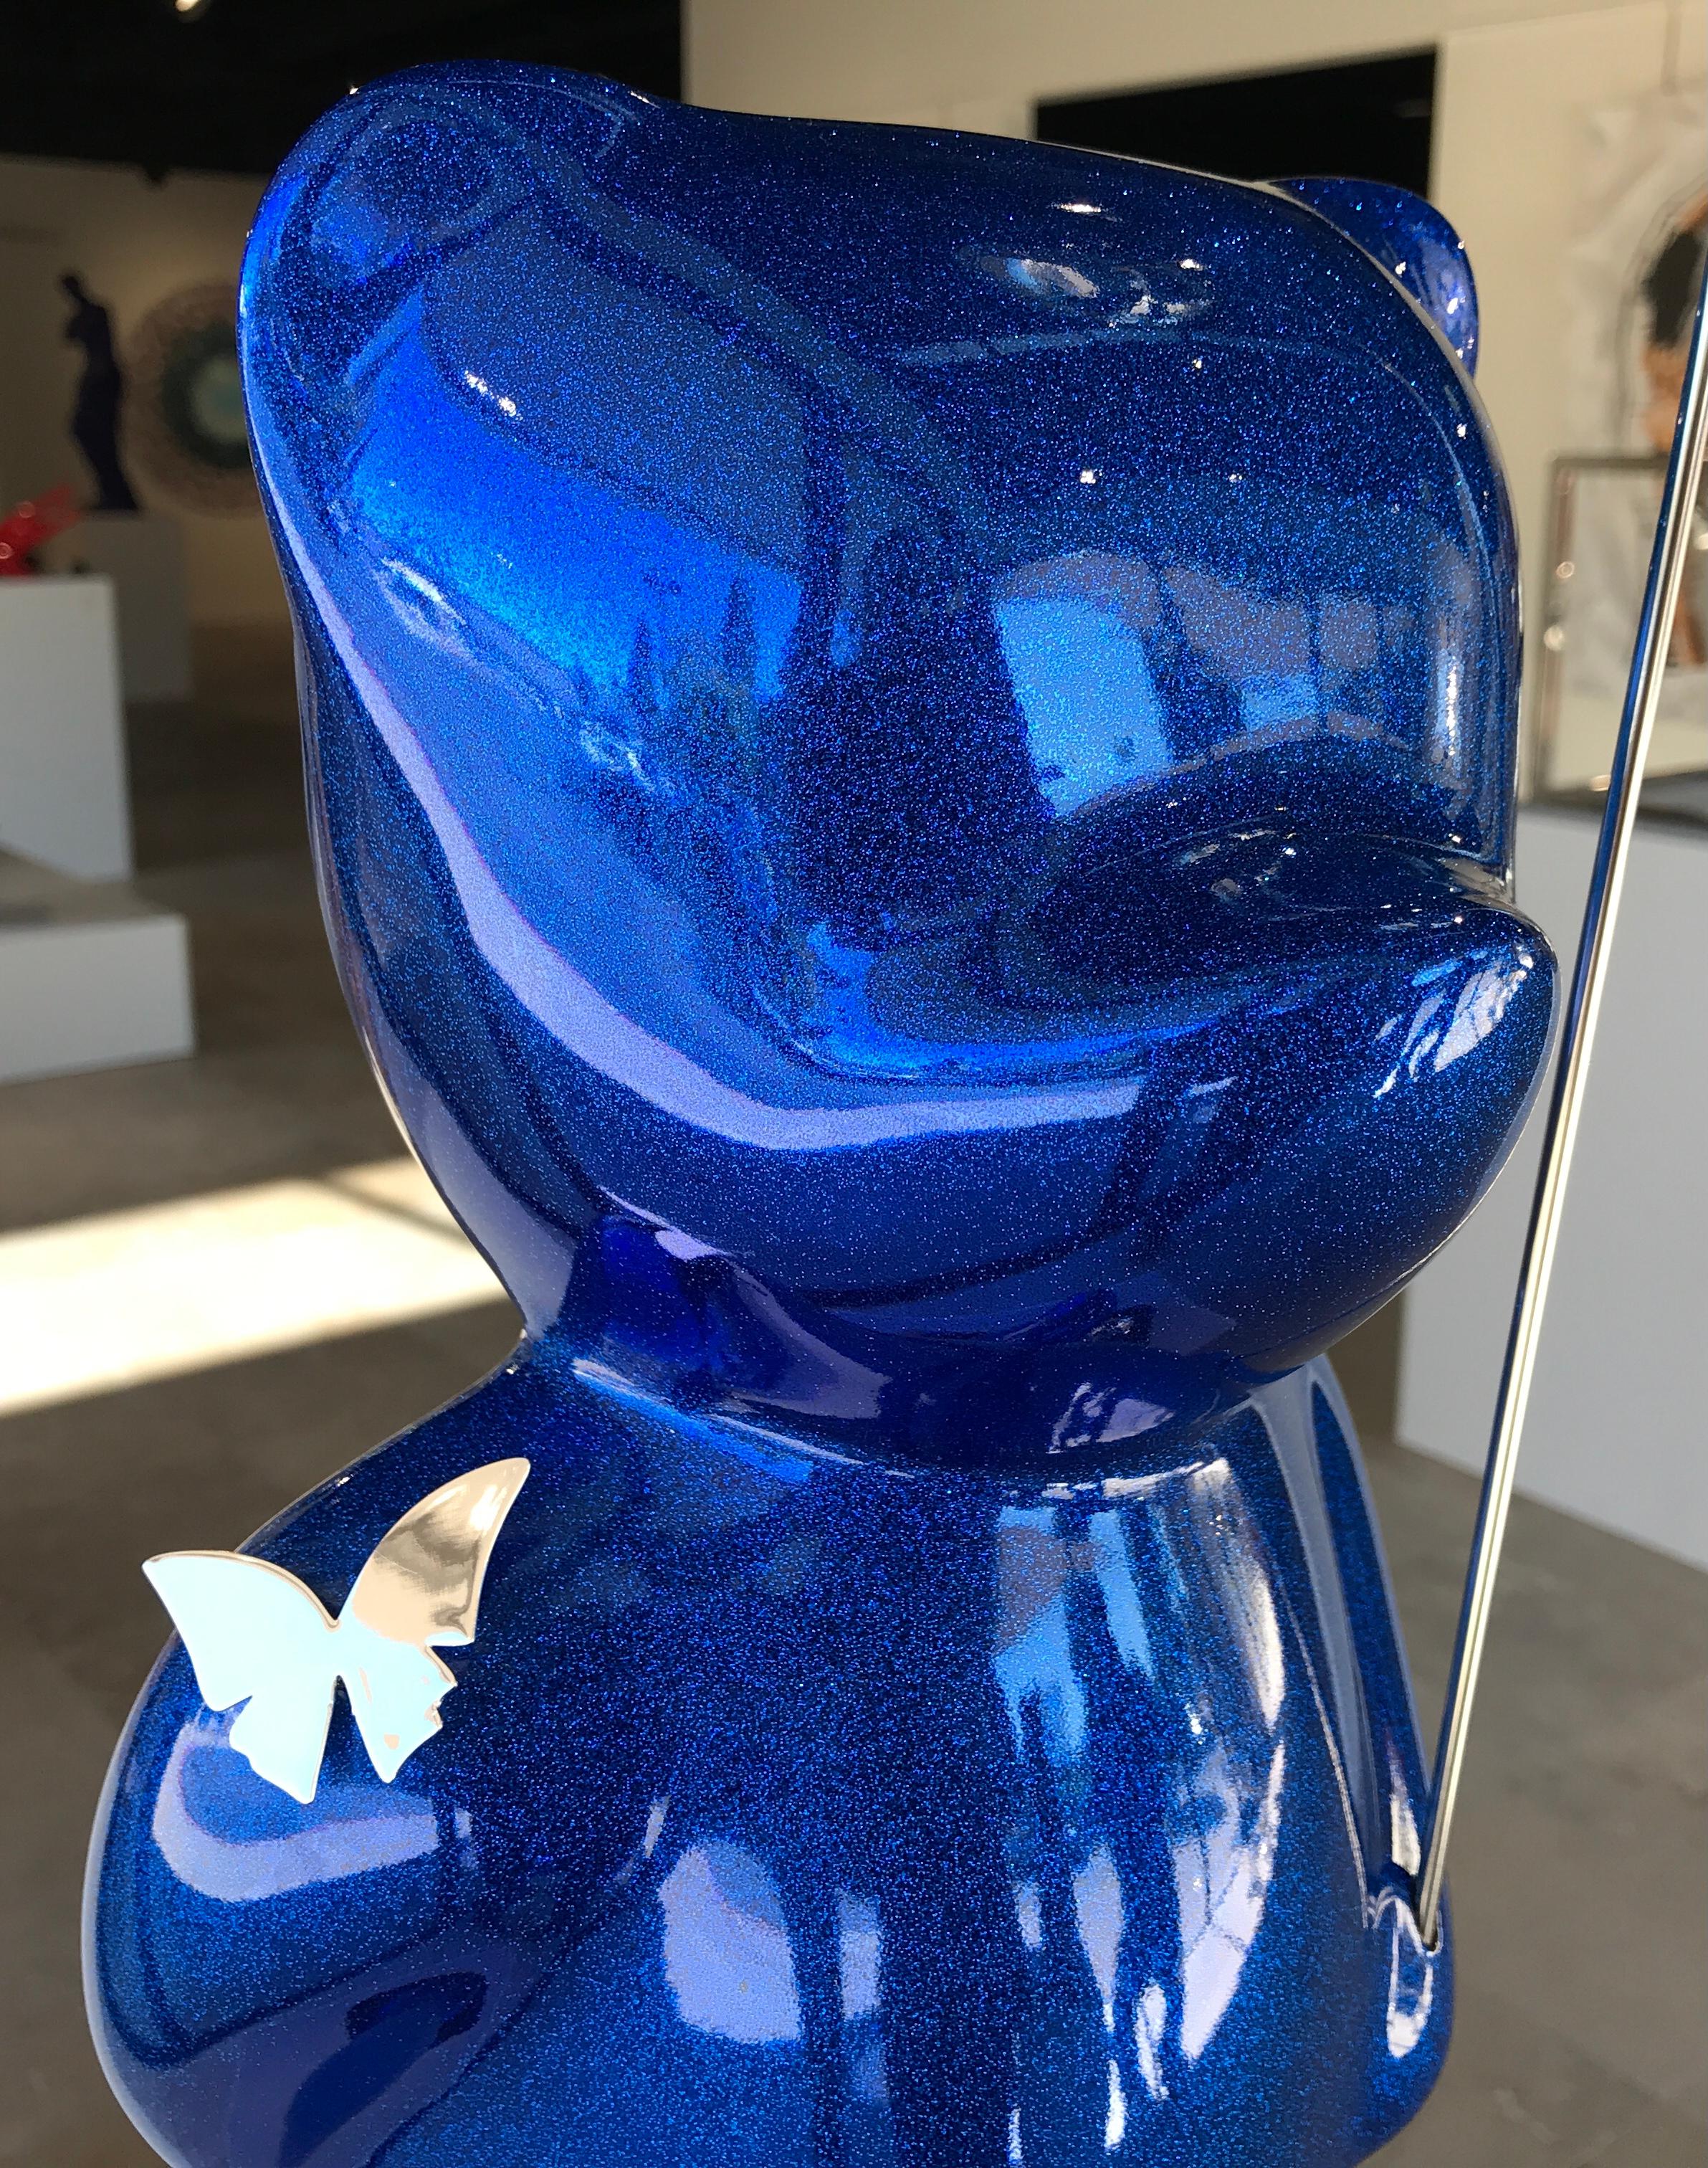 Walking Teddy - Sparkly Blue Glitter w/Silver Balloon - Contemporary Sculpture by Cévé